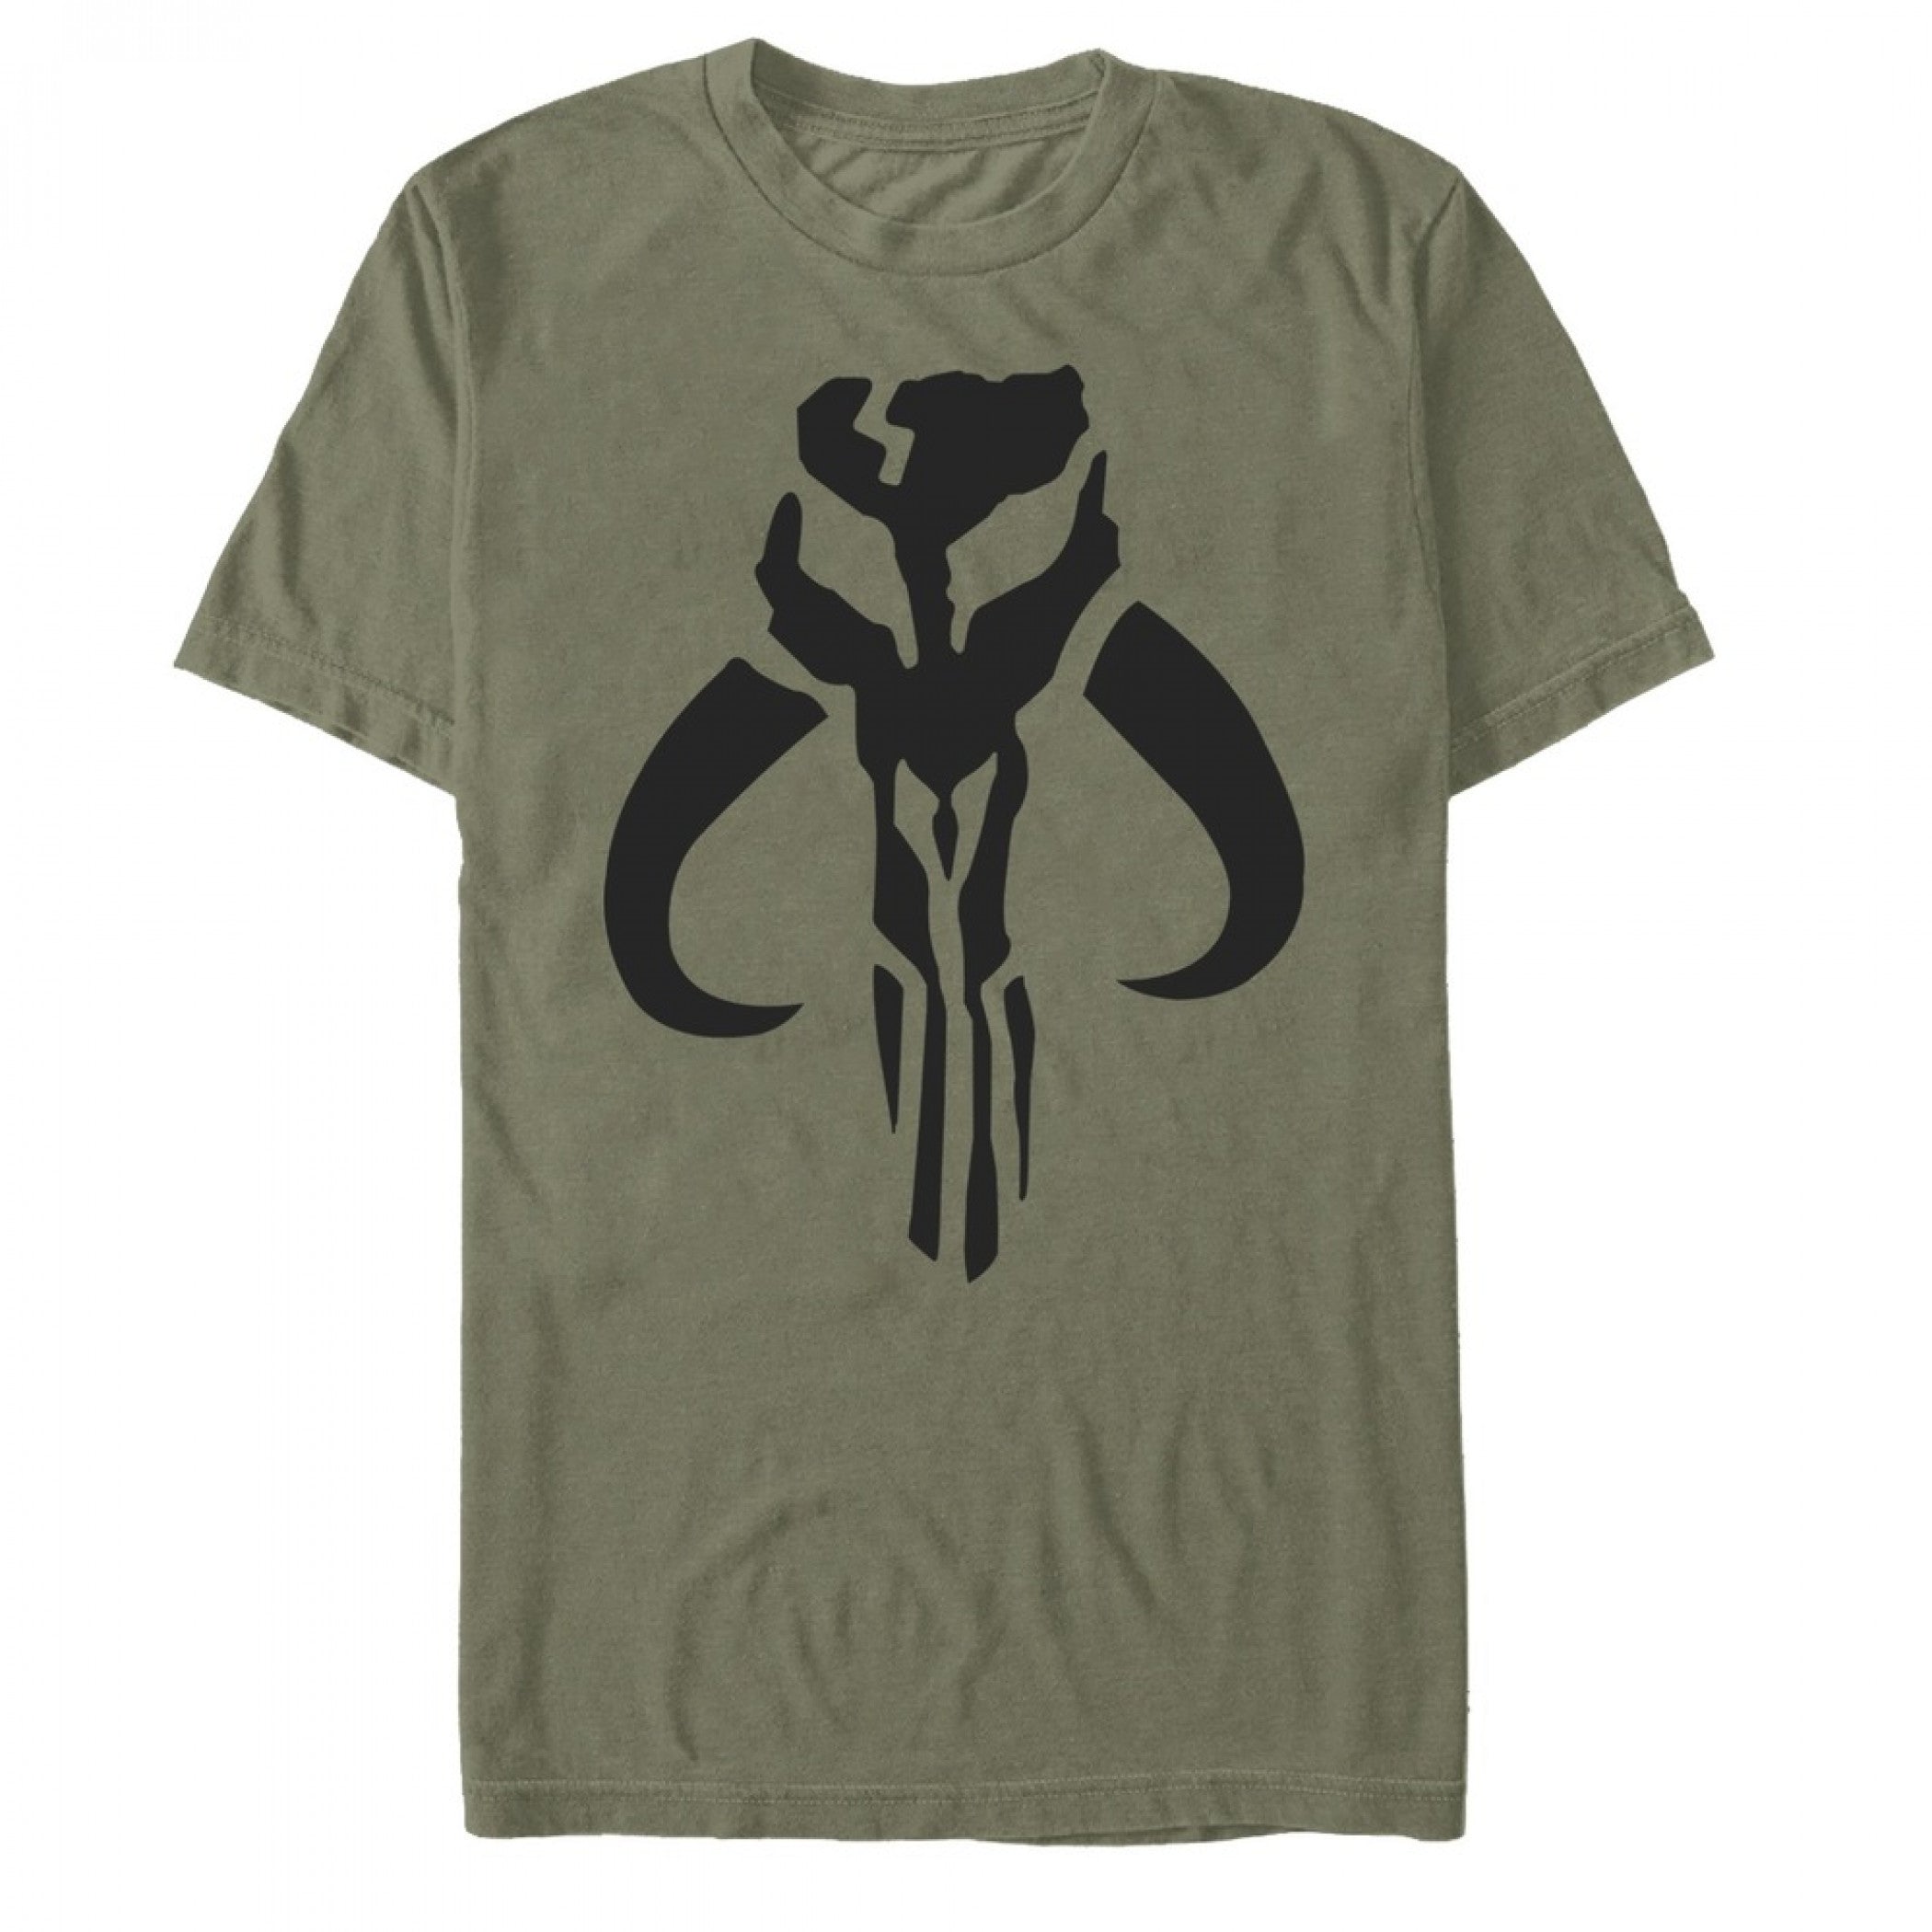 The Mandalorian Logo Army Green T-Shirt